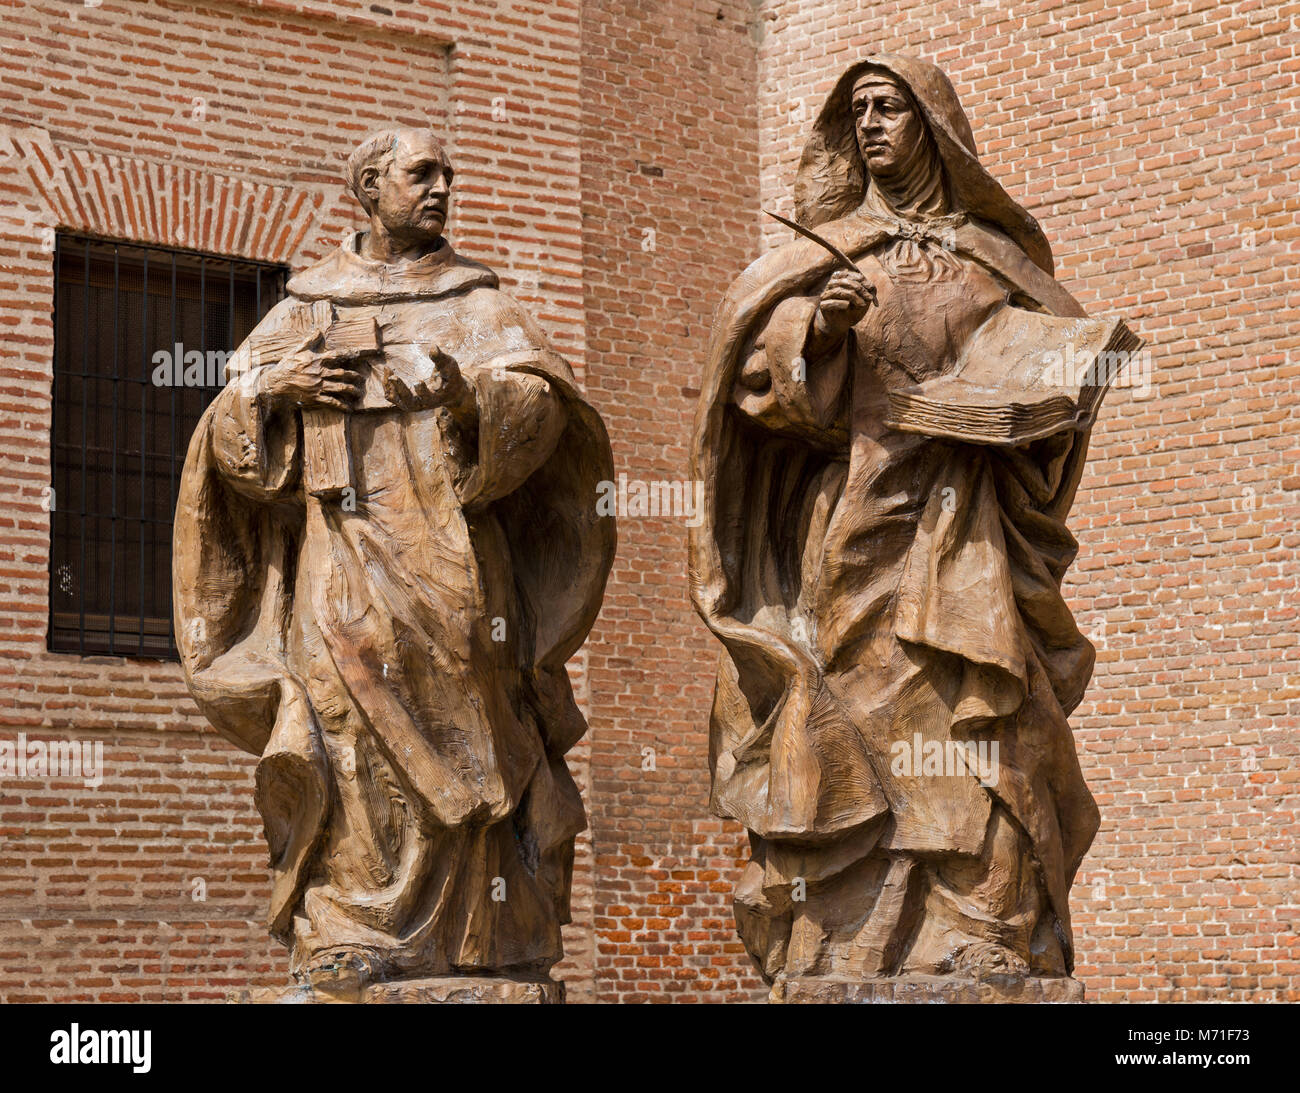 Statue in Plaza de San Juan de la Cruz commemorating the first meeting of Saint Teresa of Jesus (also known as Saint Teresa of Avila) and St John of t Stock Photo